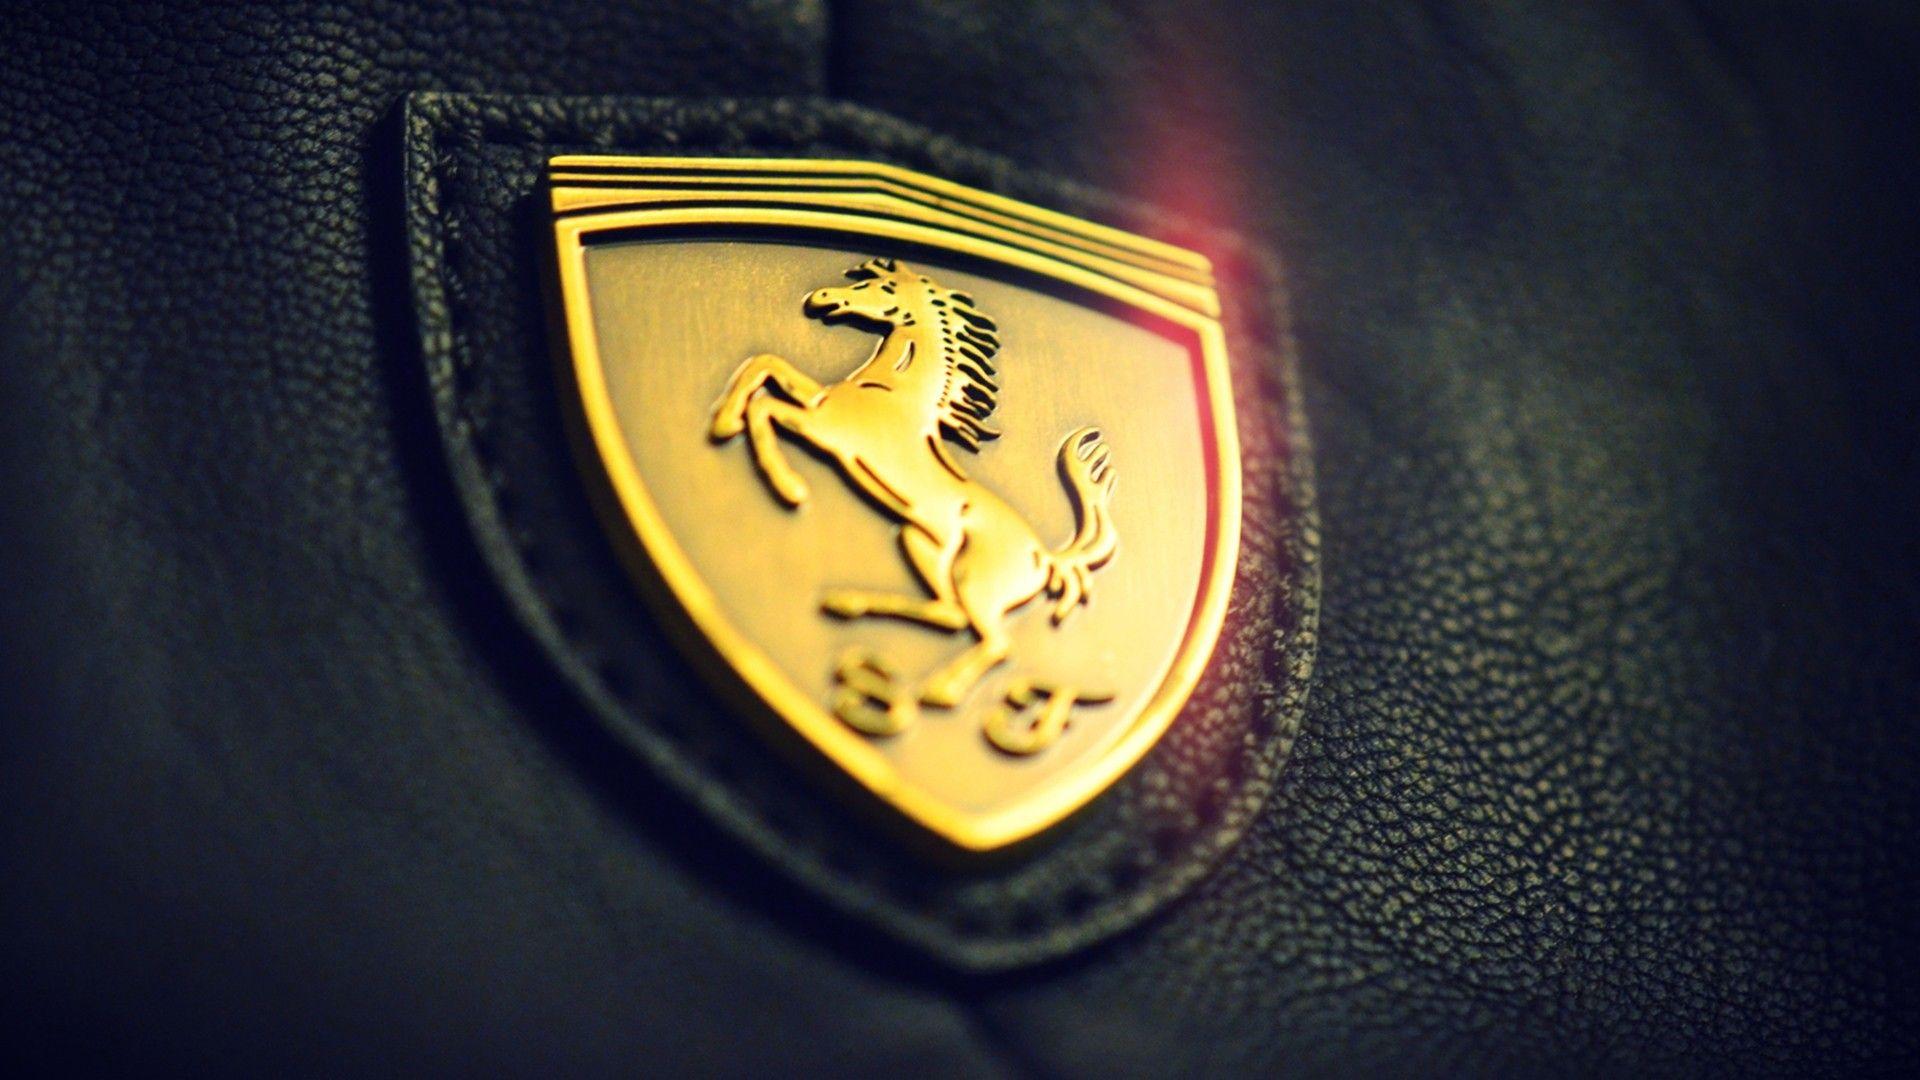 Cool Gold Logo - Cool Gold Ferrari | Desktop Backgrounds